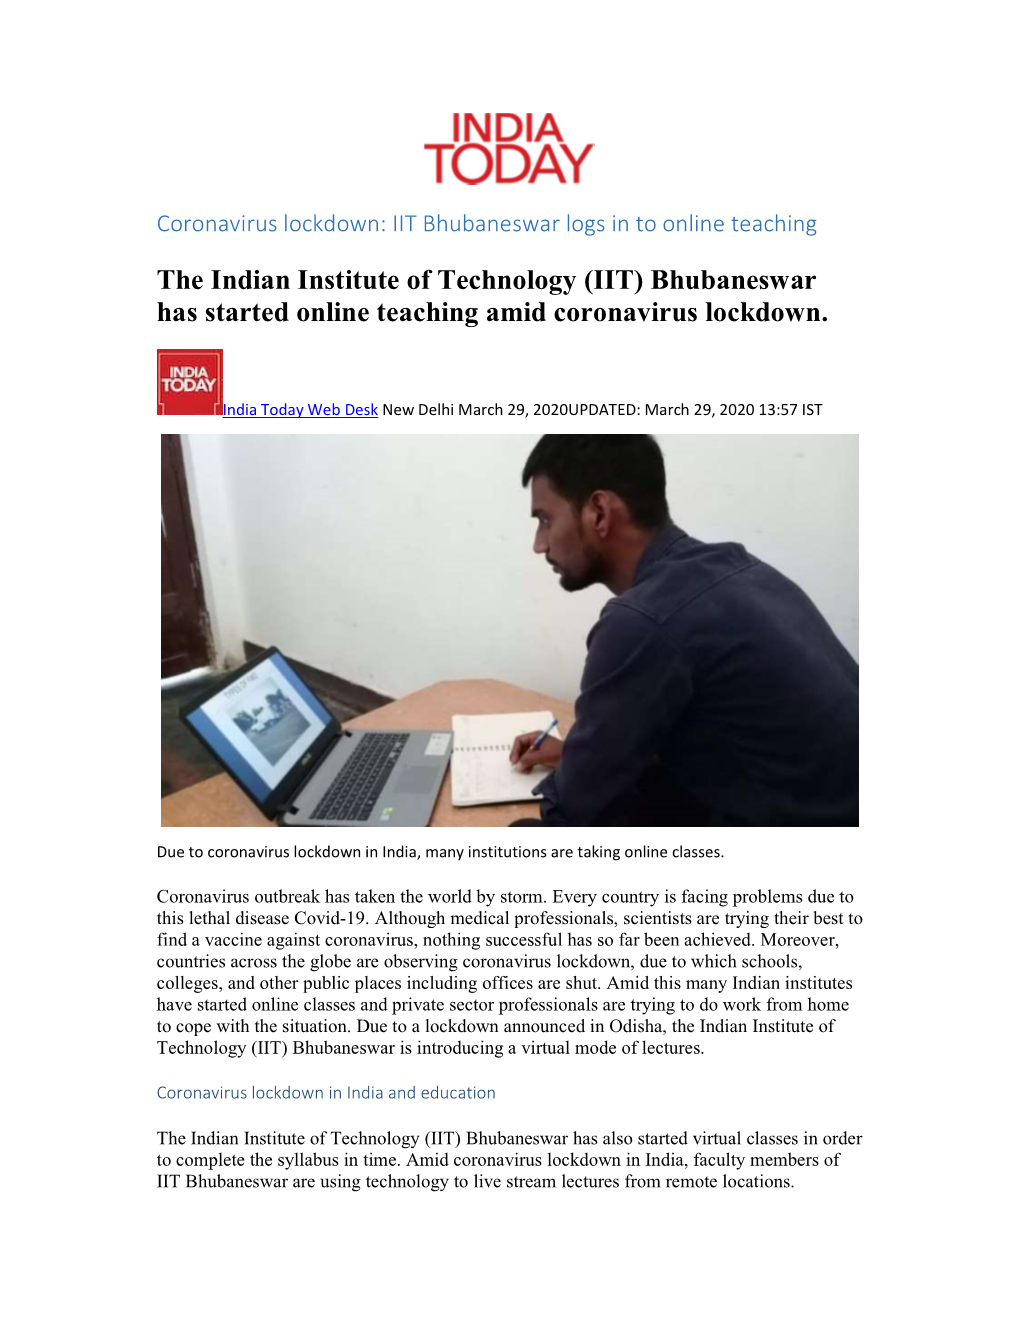 The Indian Institute of Technology (IIT) Bhubaneswar Has Started Online Teaching Amid Coronavirus Lockdown